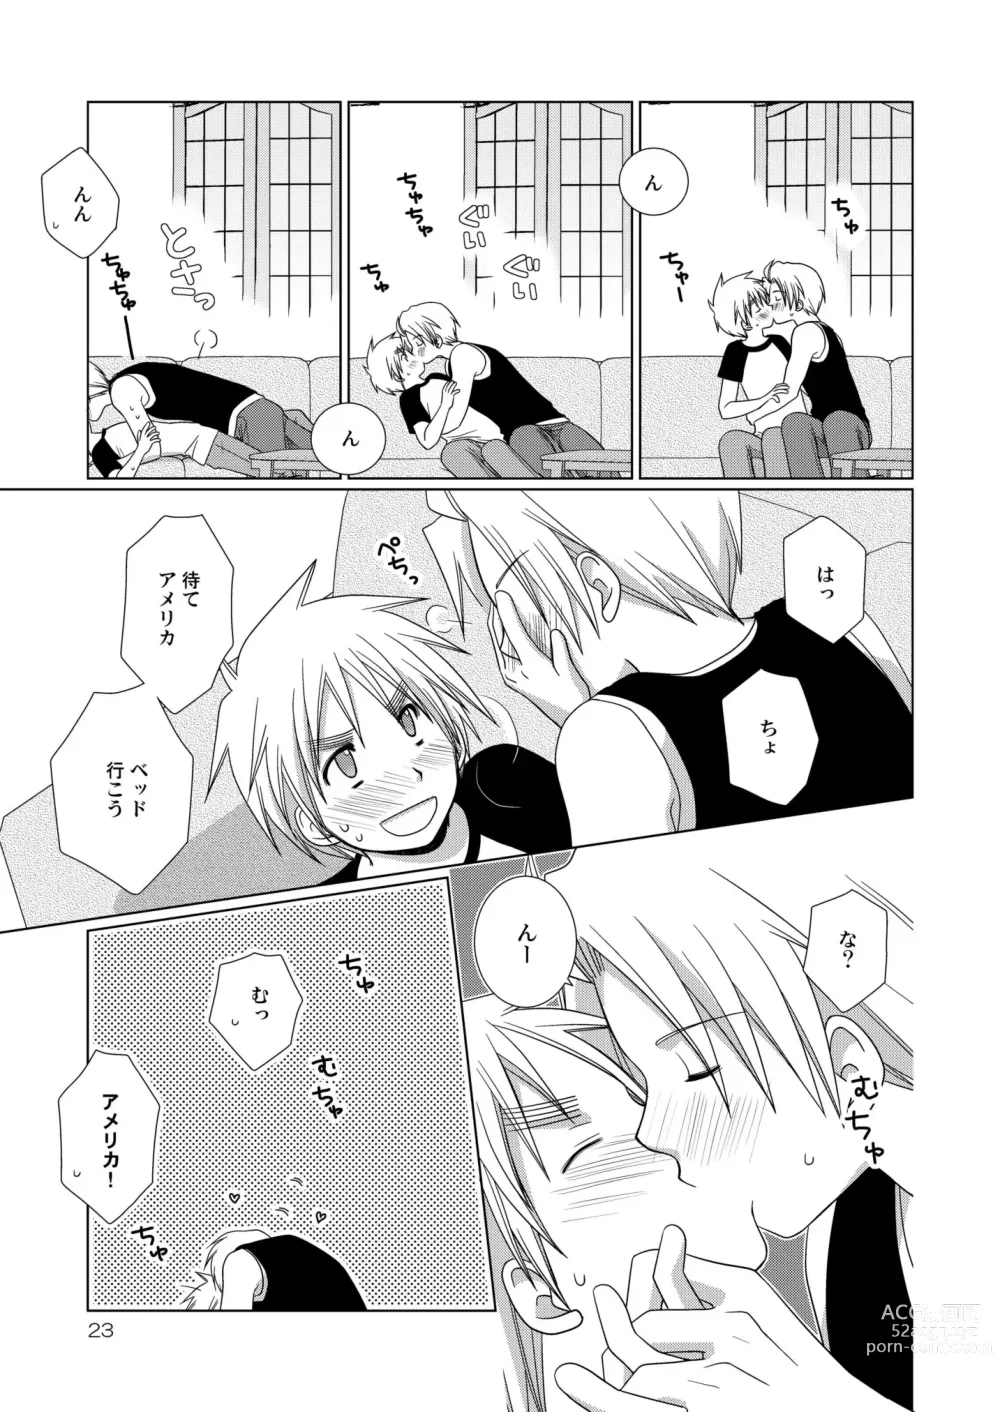 Page 23 of doujinshi [Hidariya